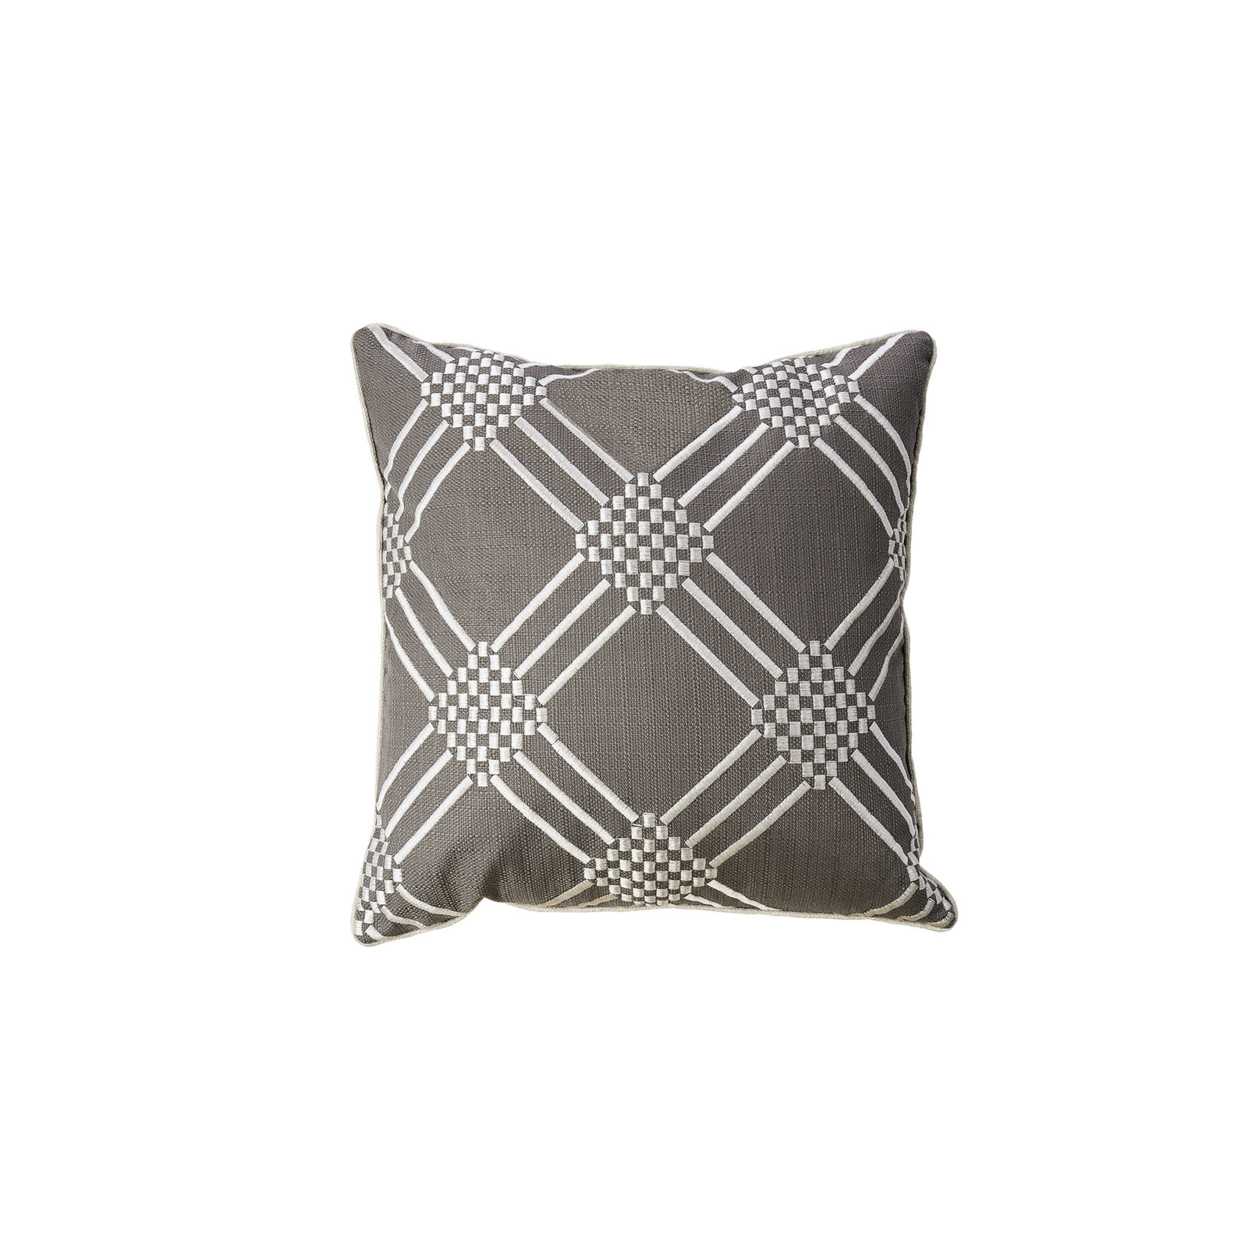 Contemporary Style Set Of 2 Throw Pillows With Diamond Patterns, Gun Metal Gray- Saltoro Sherpi